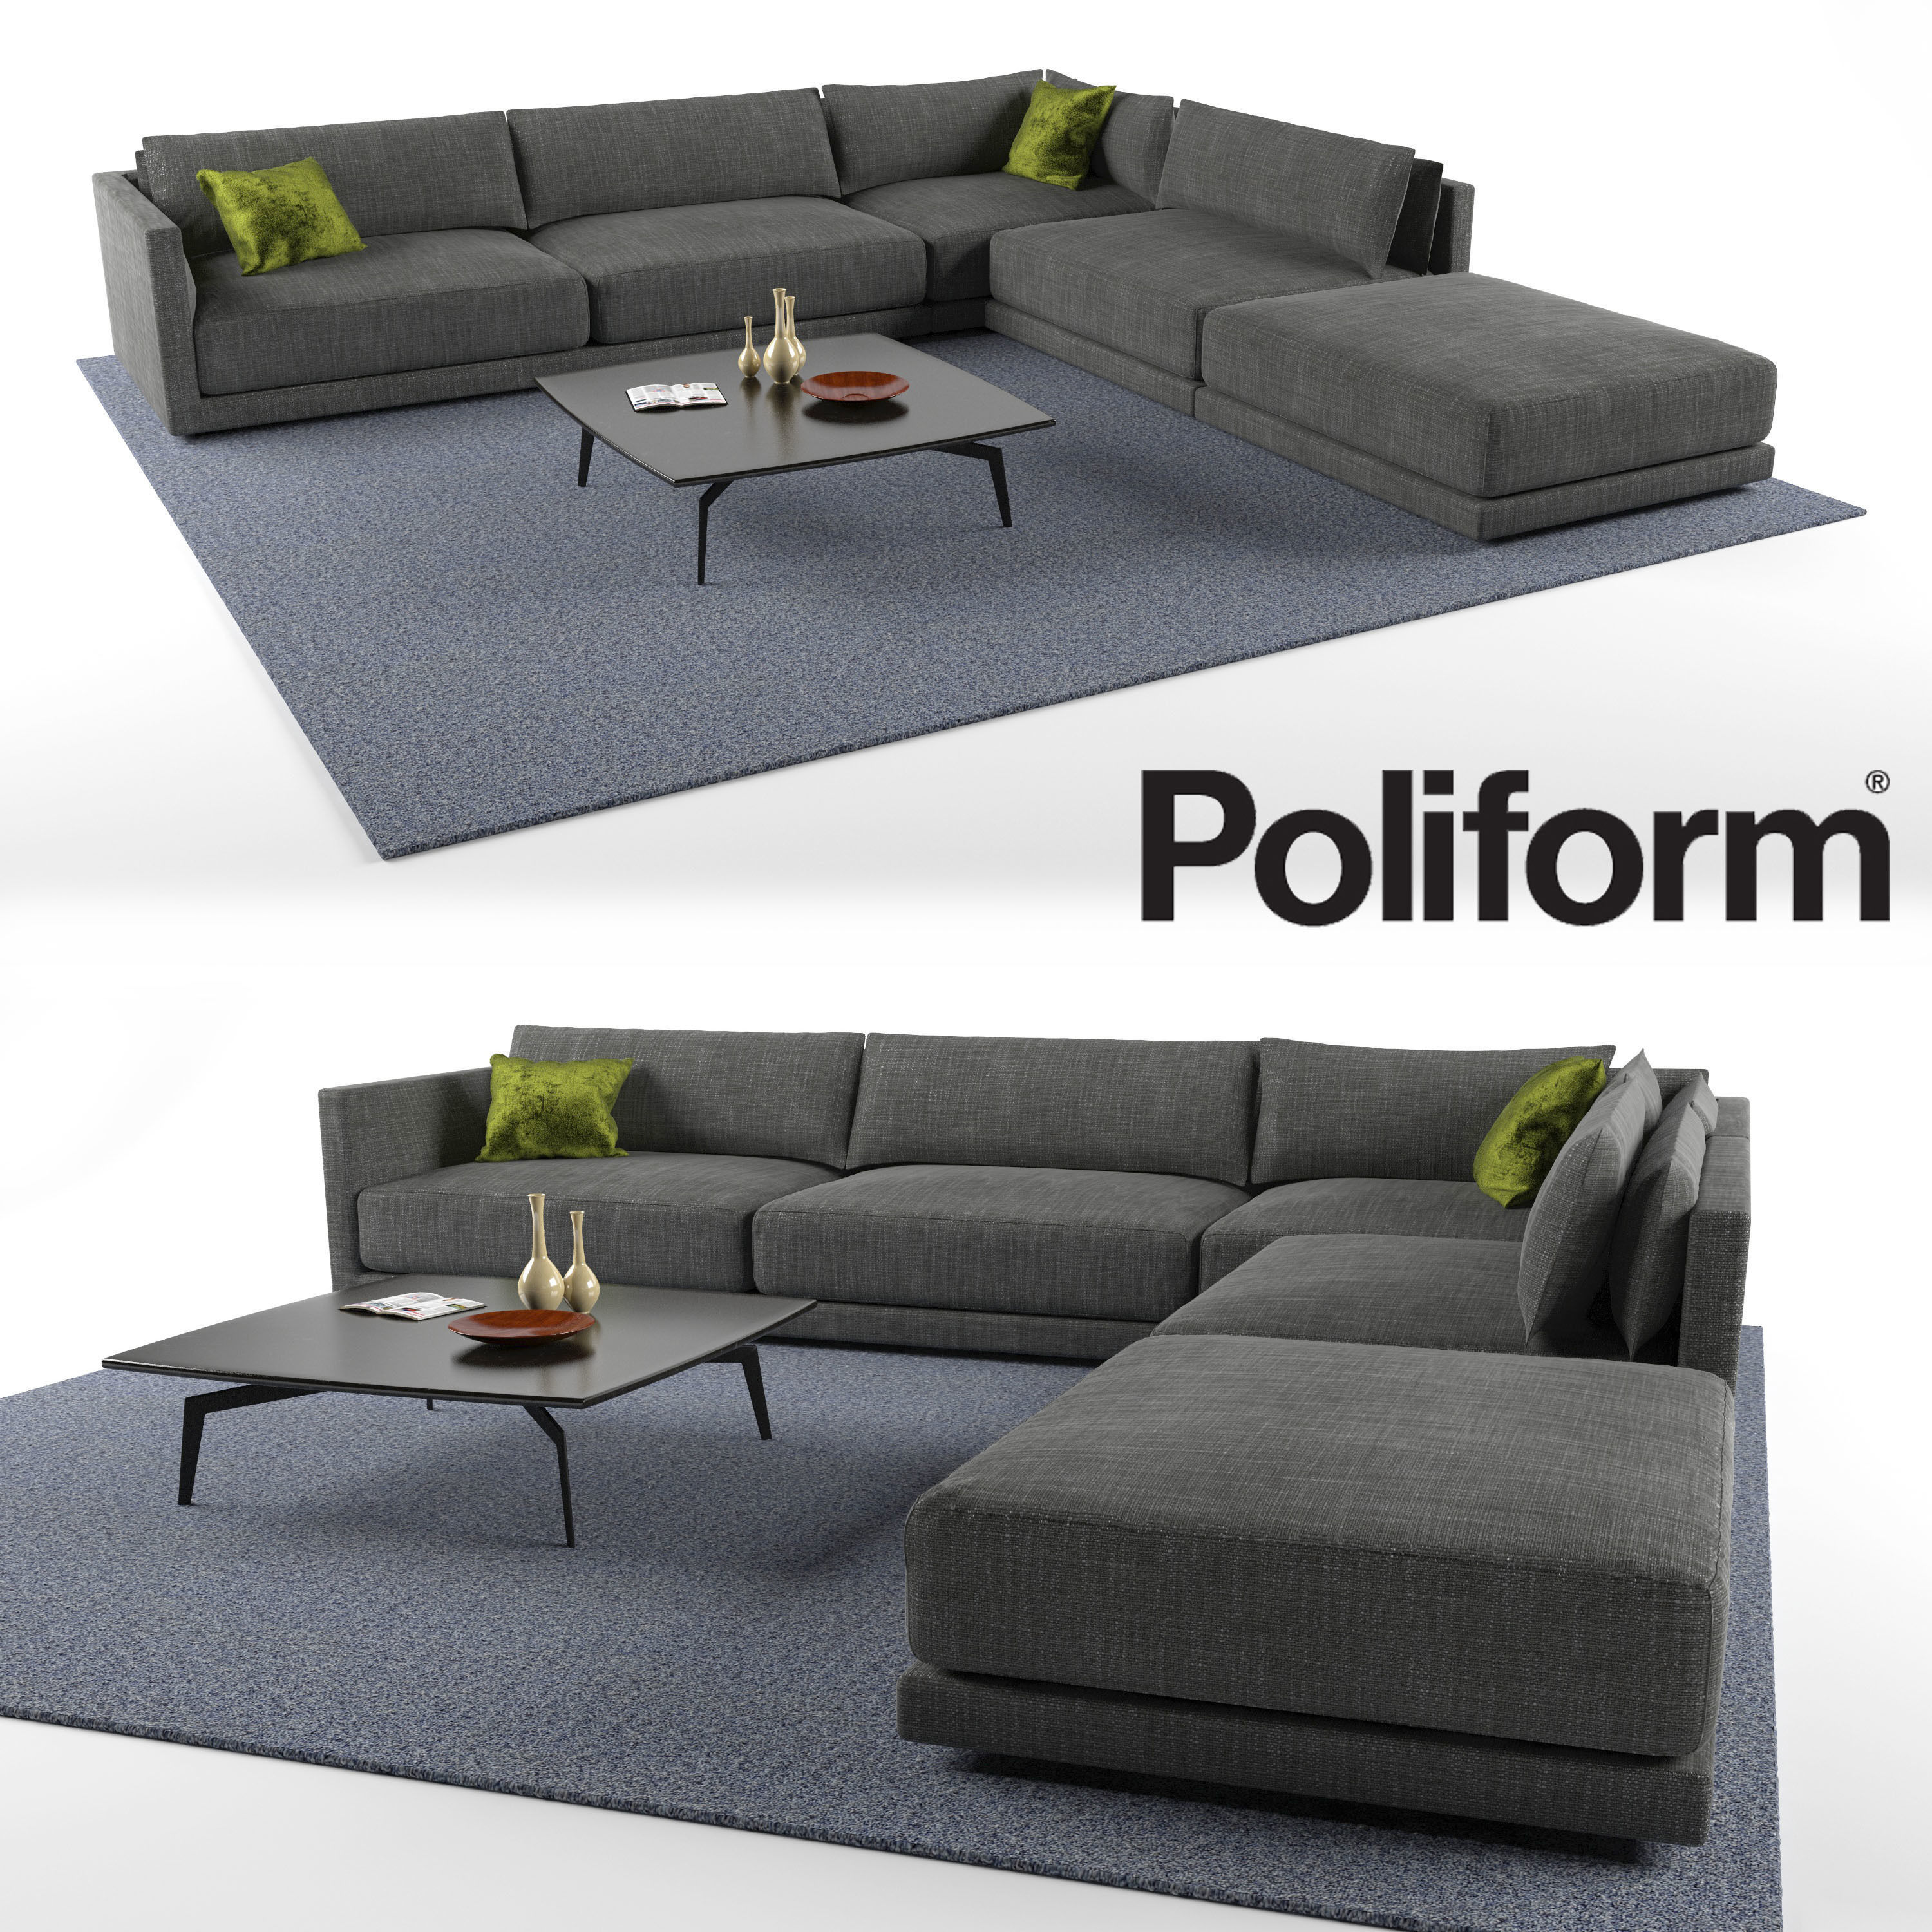 Poliform Bristol Sofa Set 02 Model